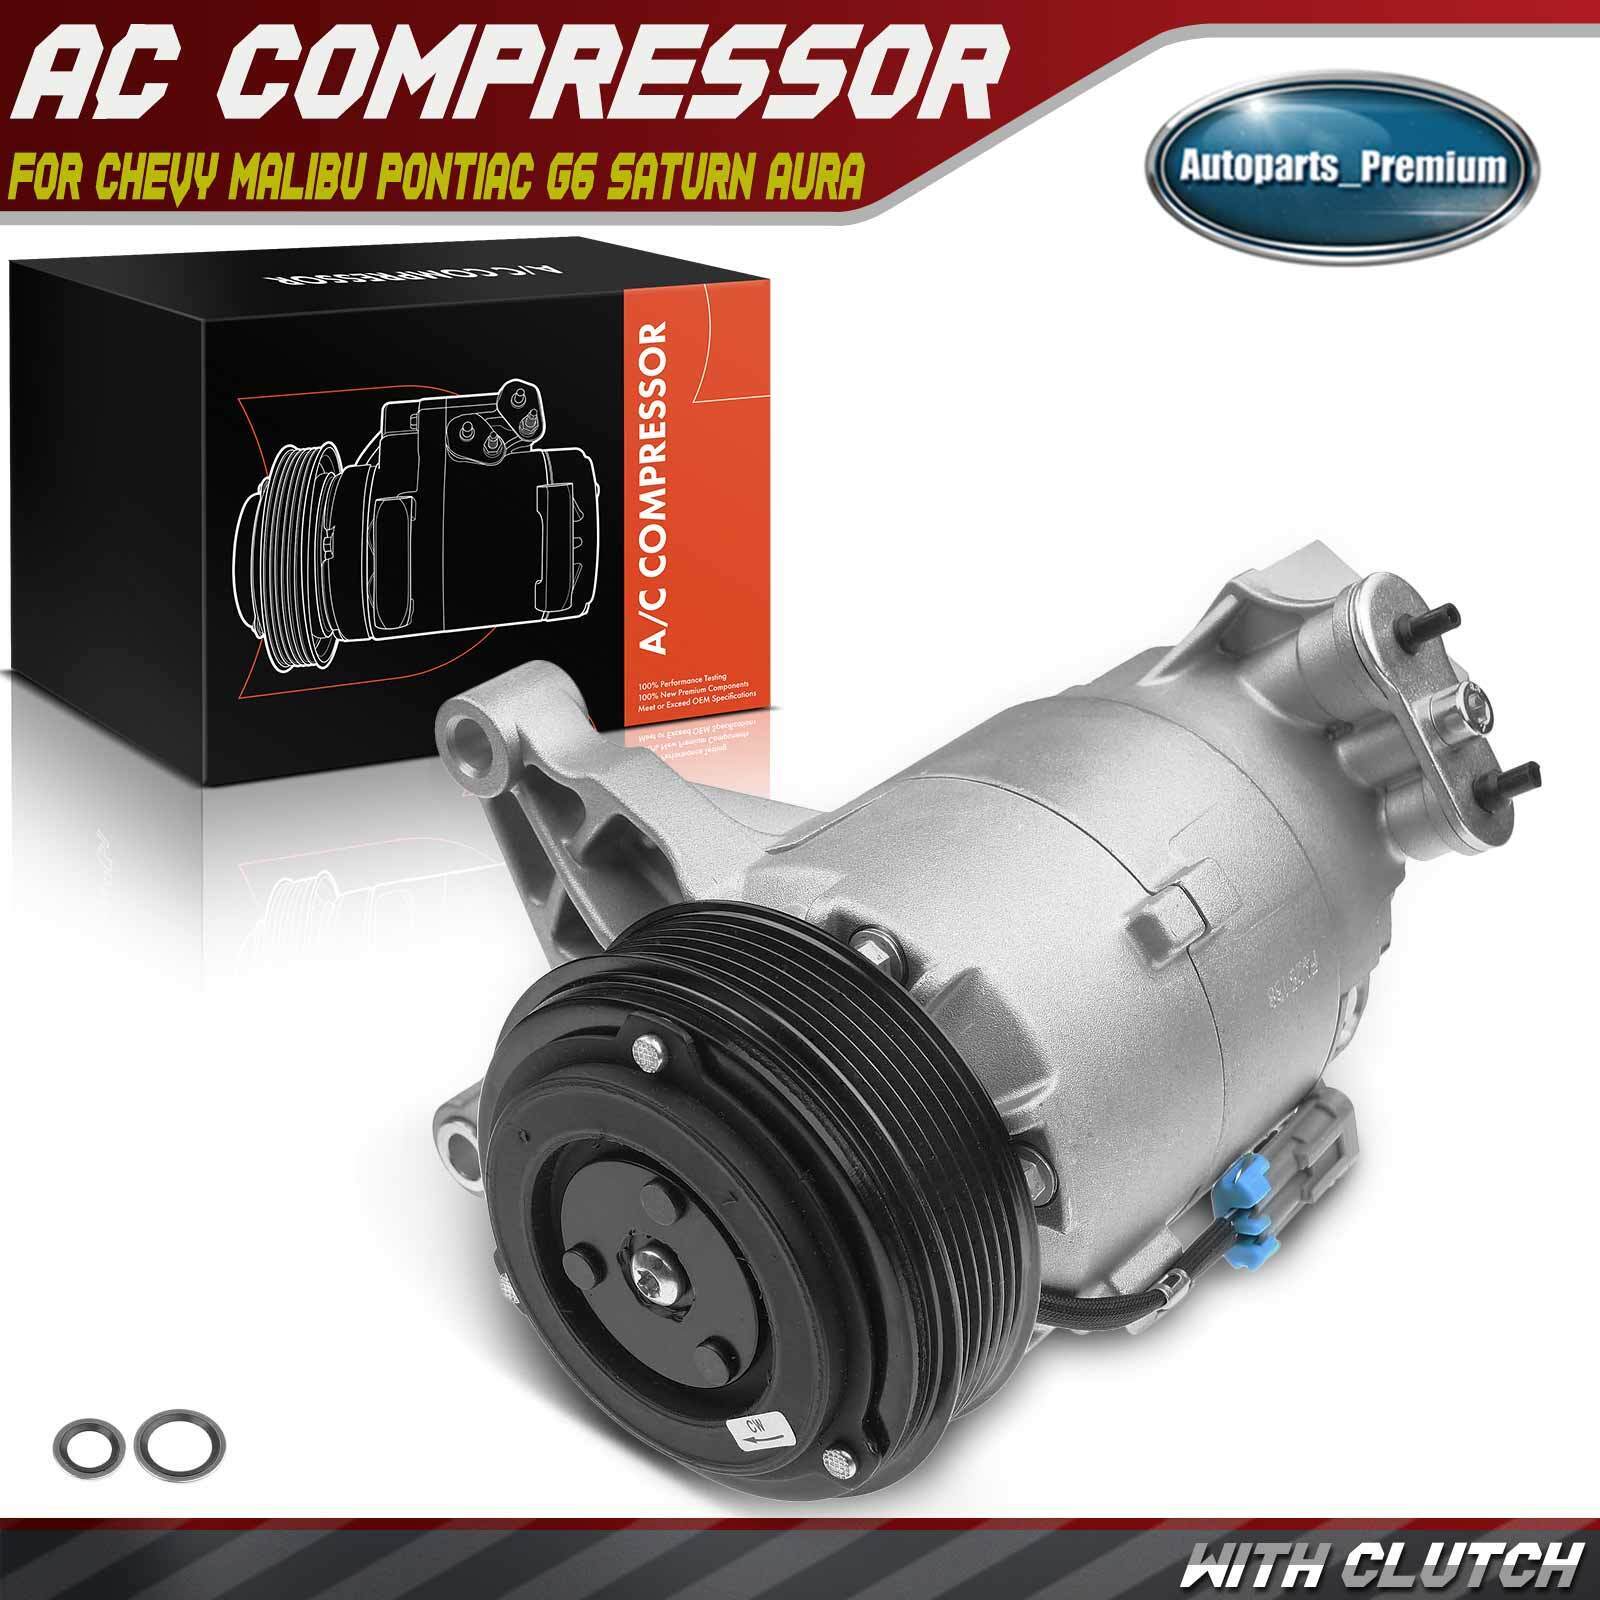 AC Compressor with Clutch for Chevrolet Malibu 2007-2010 Pontiac G6 Saturn Aura